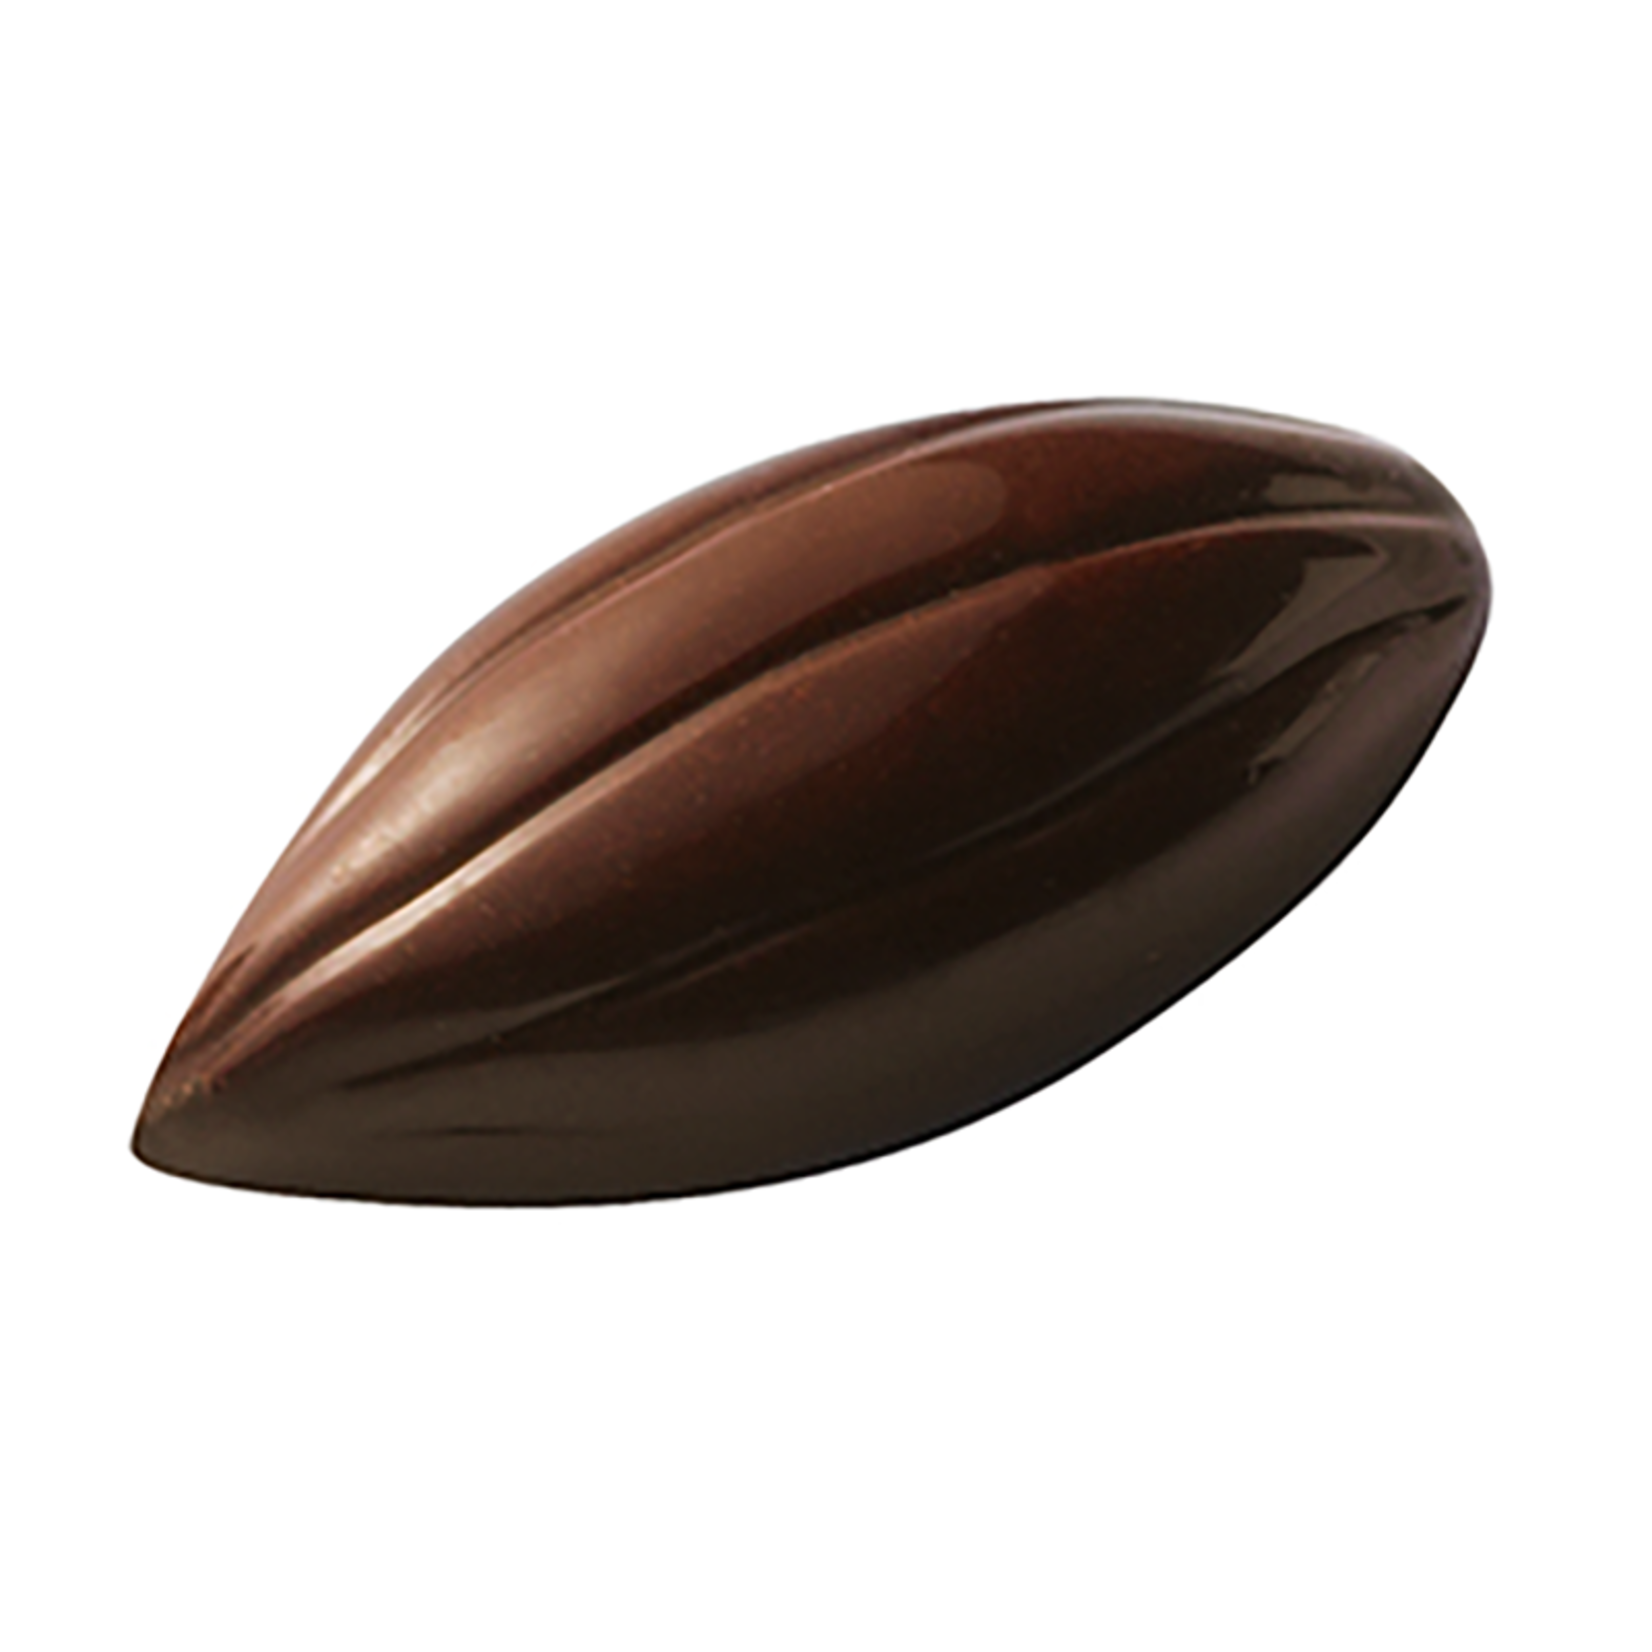 Cacao Barry Cacao Barry - Cocoa Pod Tritan Chocolate Mold (24 cavity)